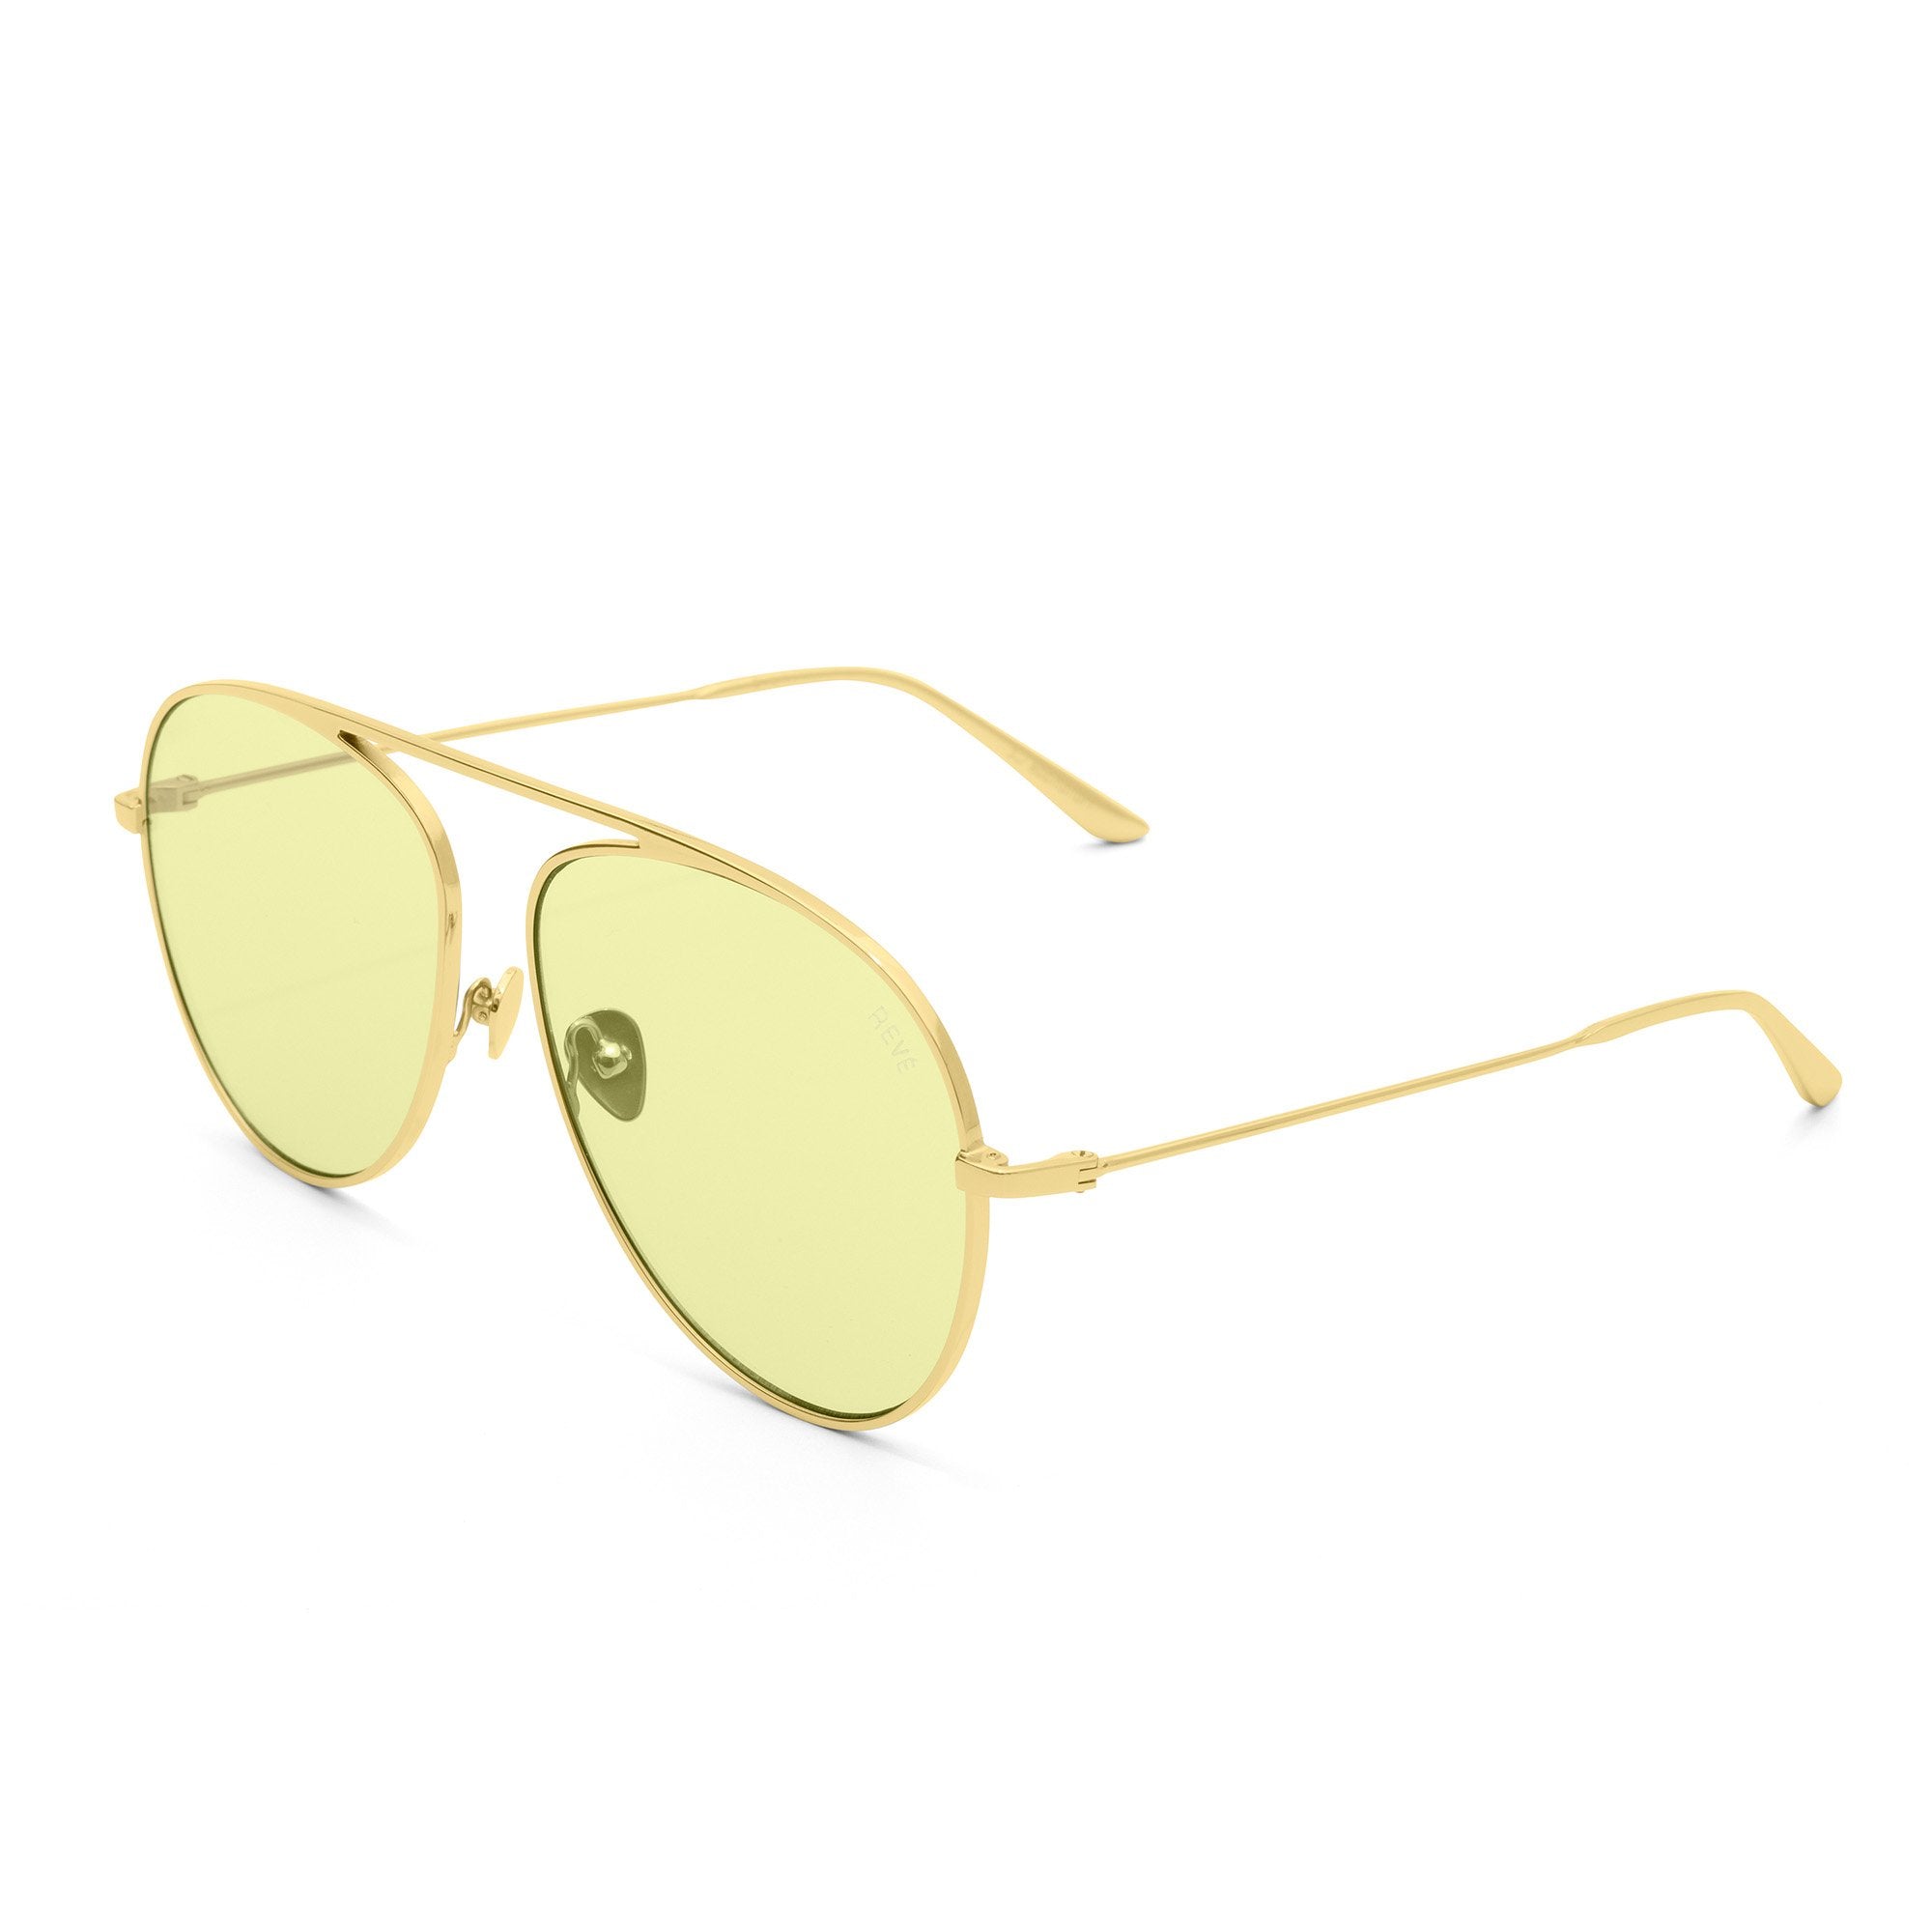 REVE by RENE jellybean sunglasses